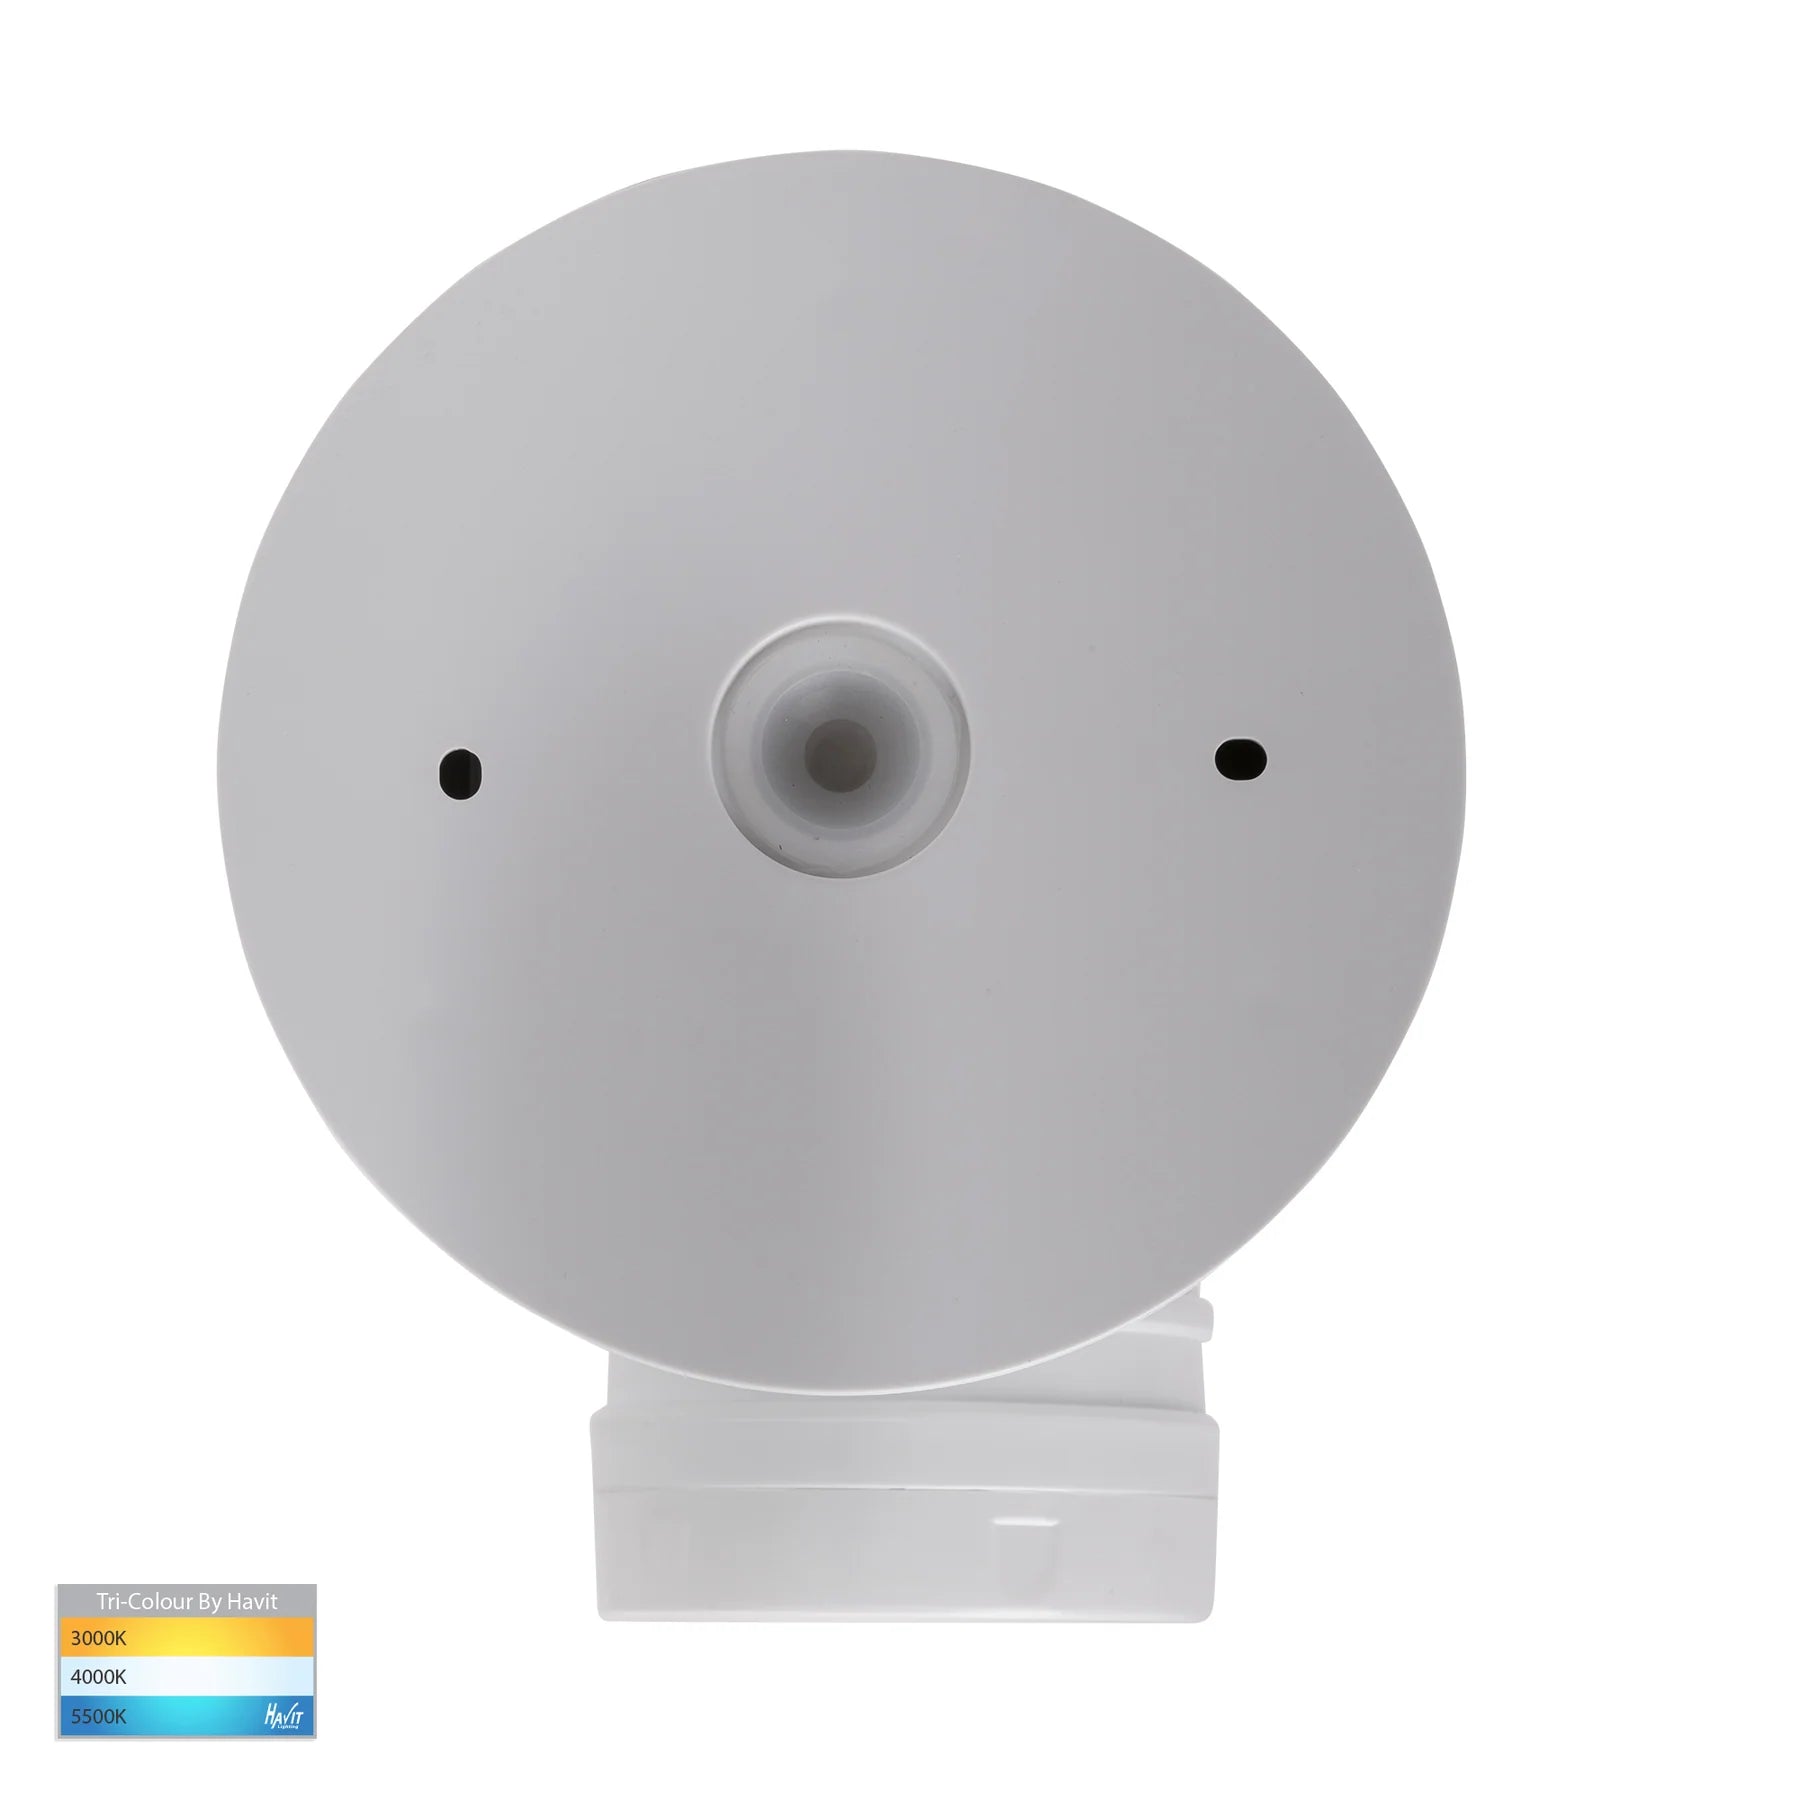 Focus Security Wall Light Adjustable 240V White Polycarbonate 3 CCT - HV3792T-WHT